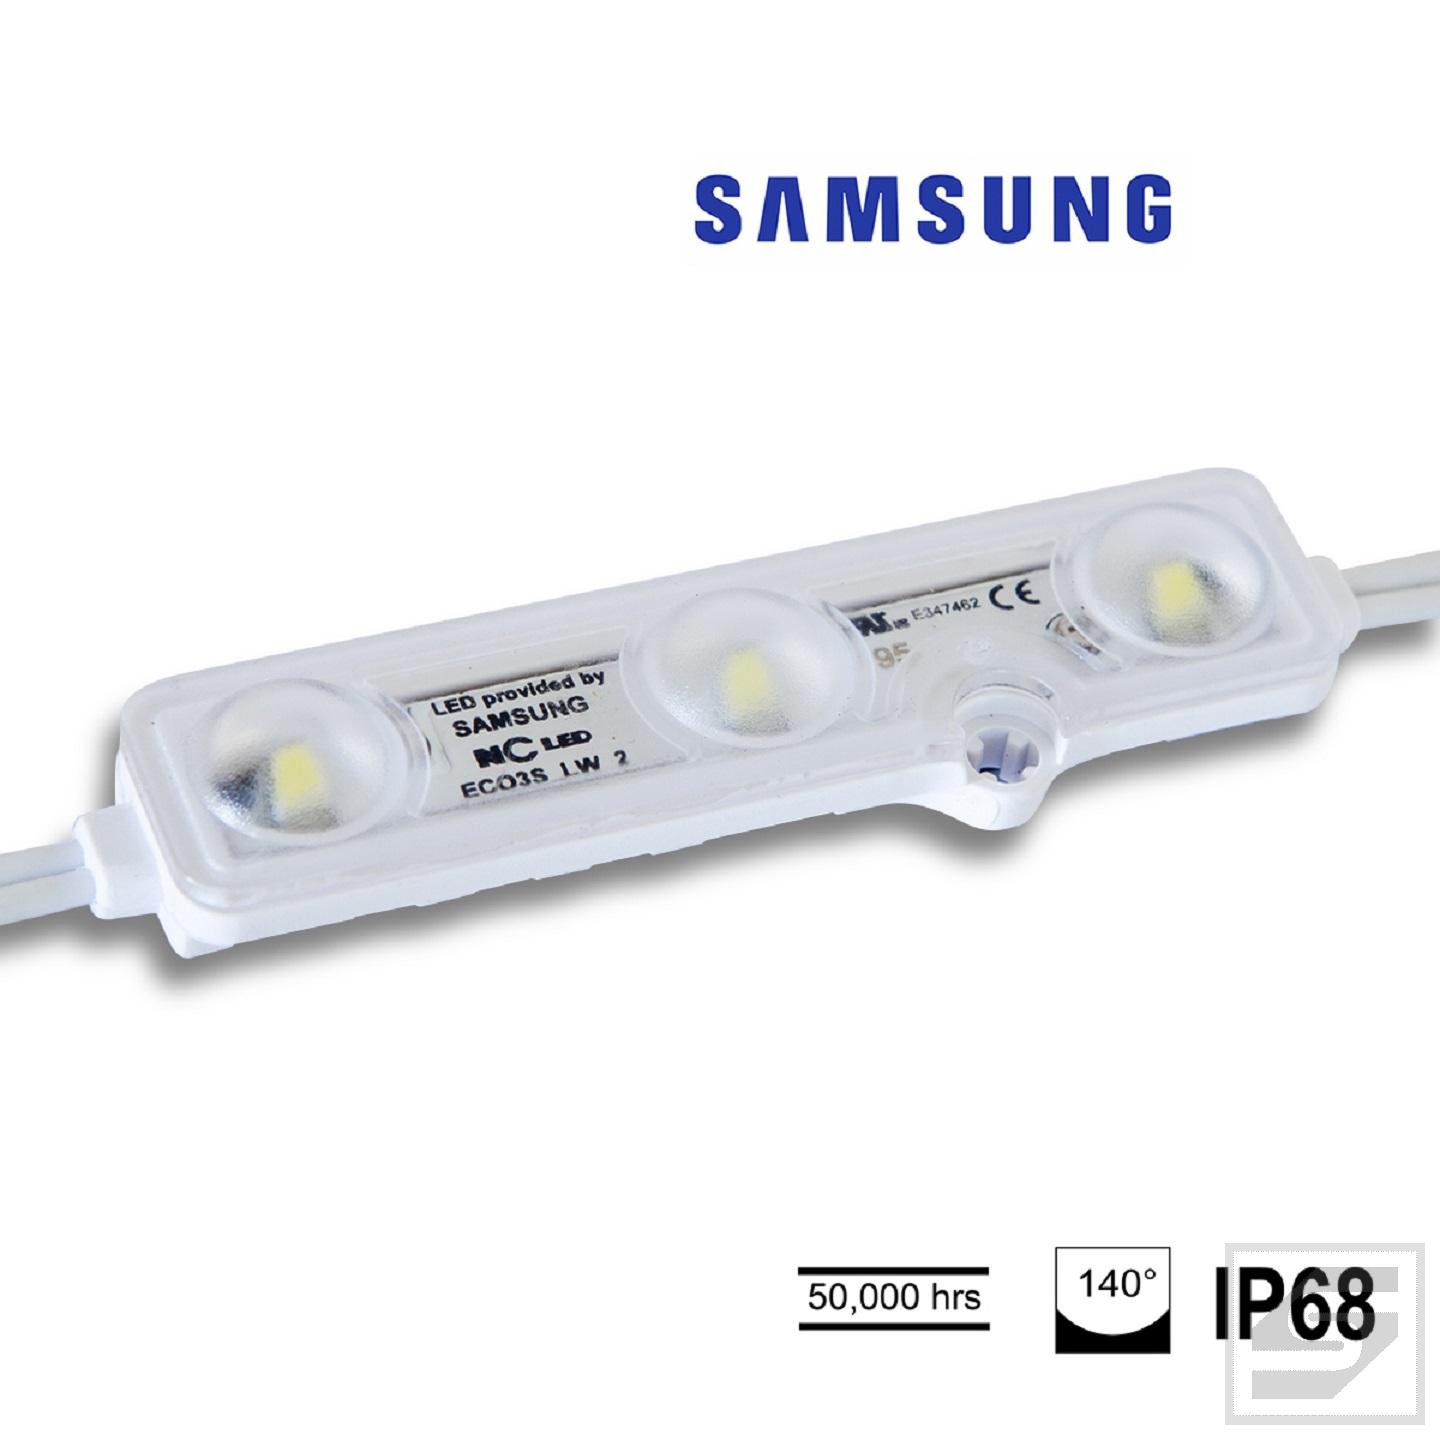 Moduł LED NC LENS SAMSUNG biały 1W 6500K;12VDC;83mA;93lm;6x15x11;IP68